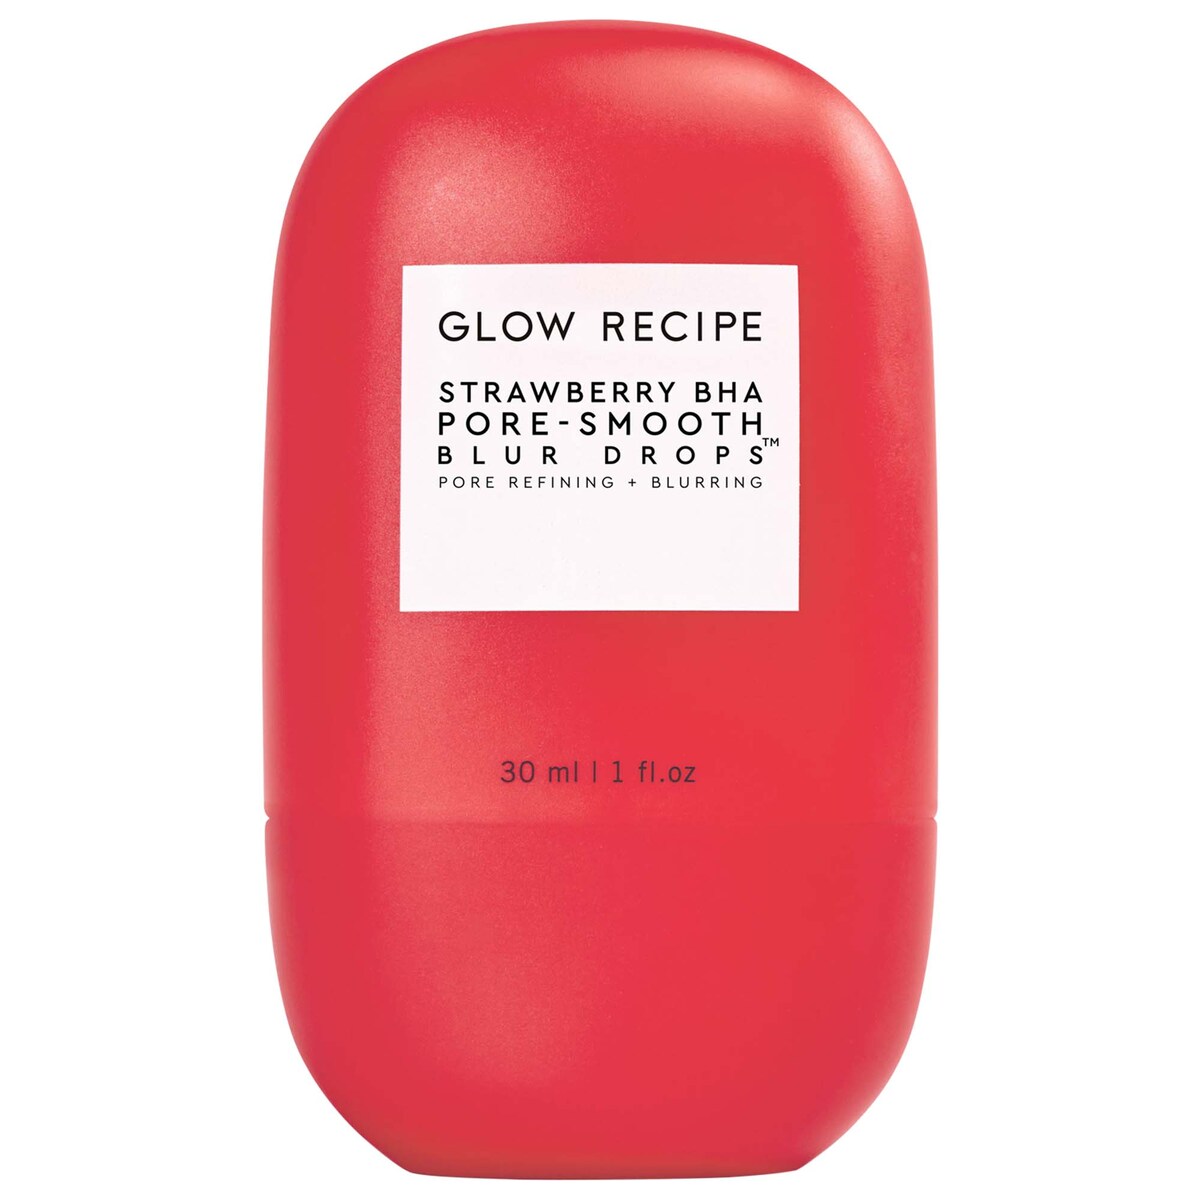 Sephora Glow Recipe Strawberry BHA Pore-Smooth Blur Drops